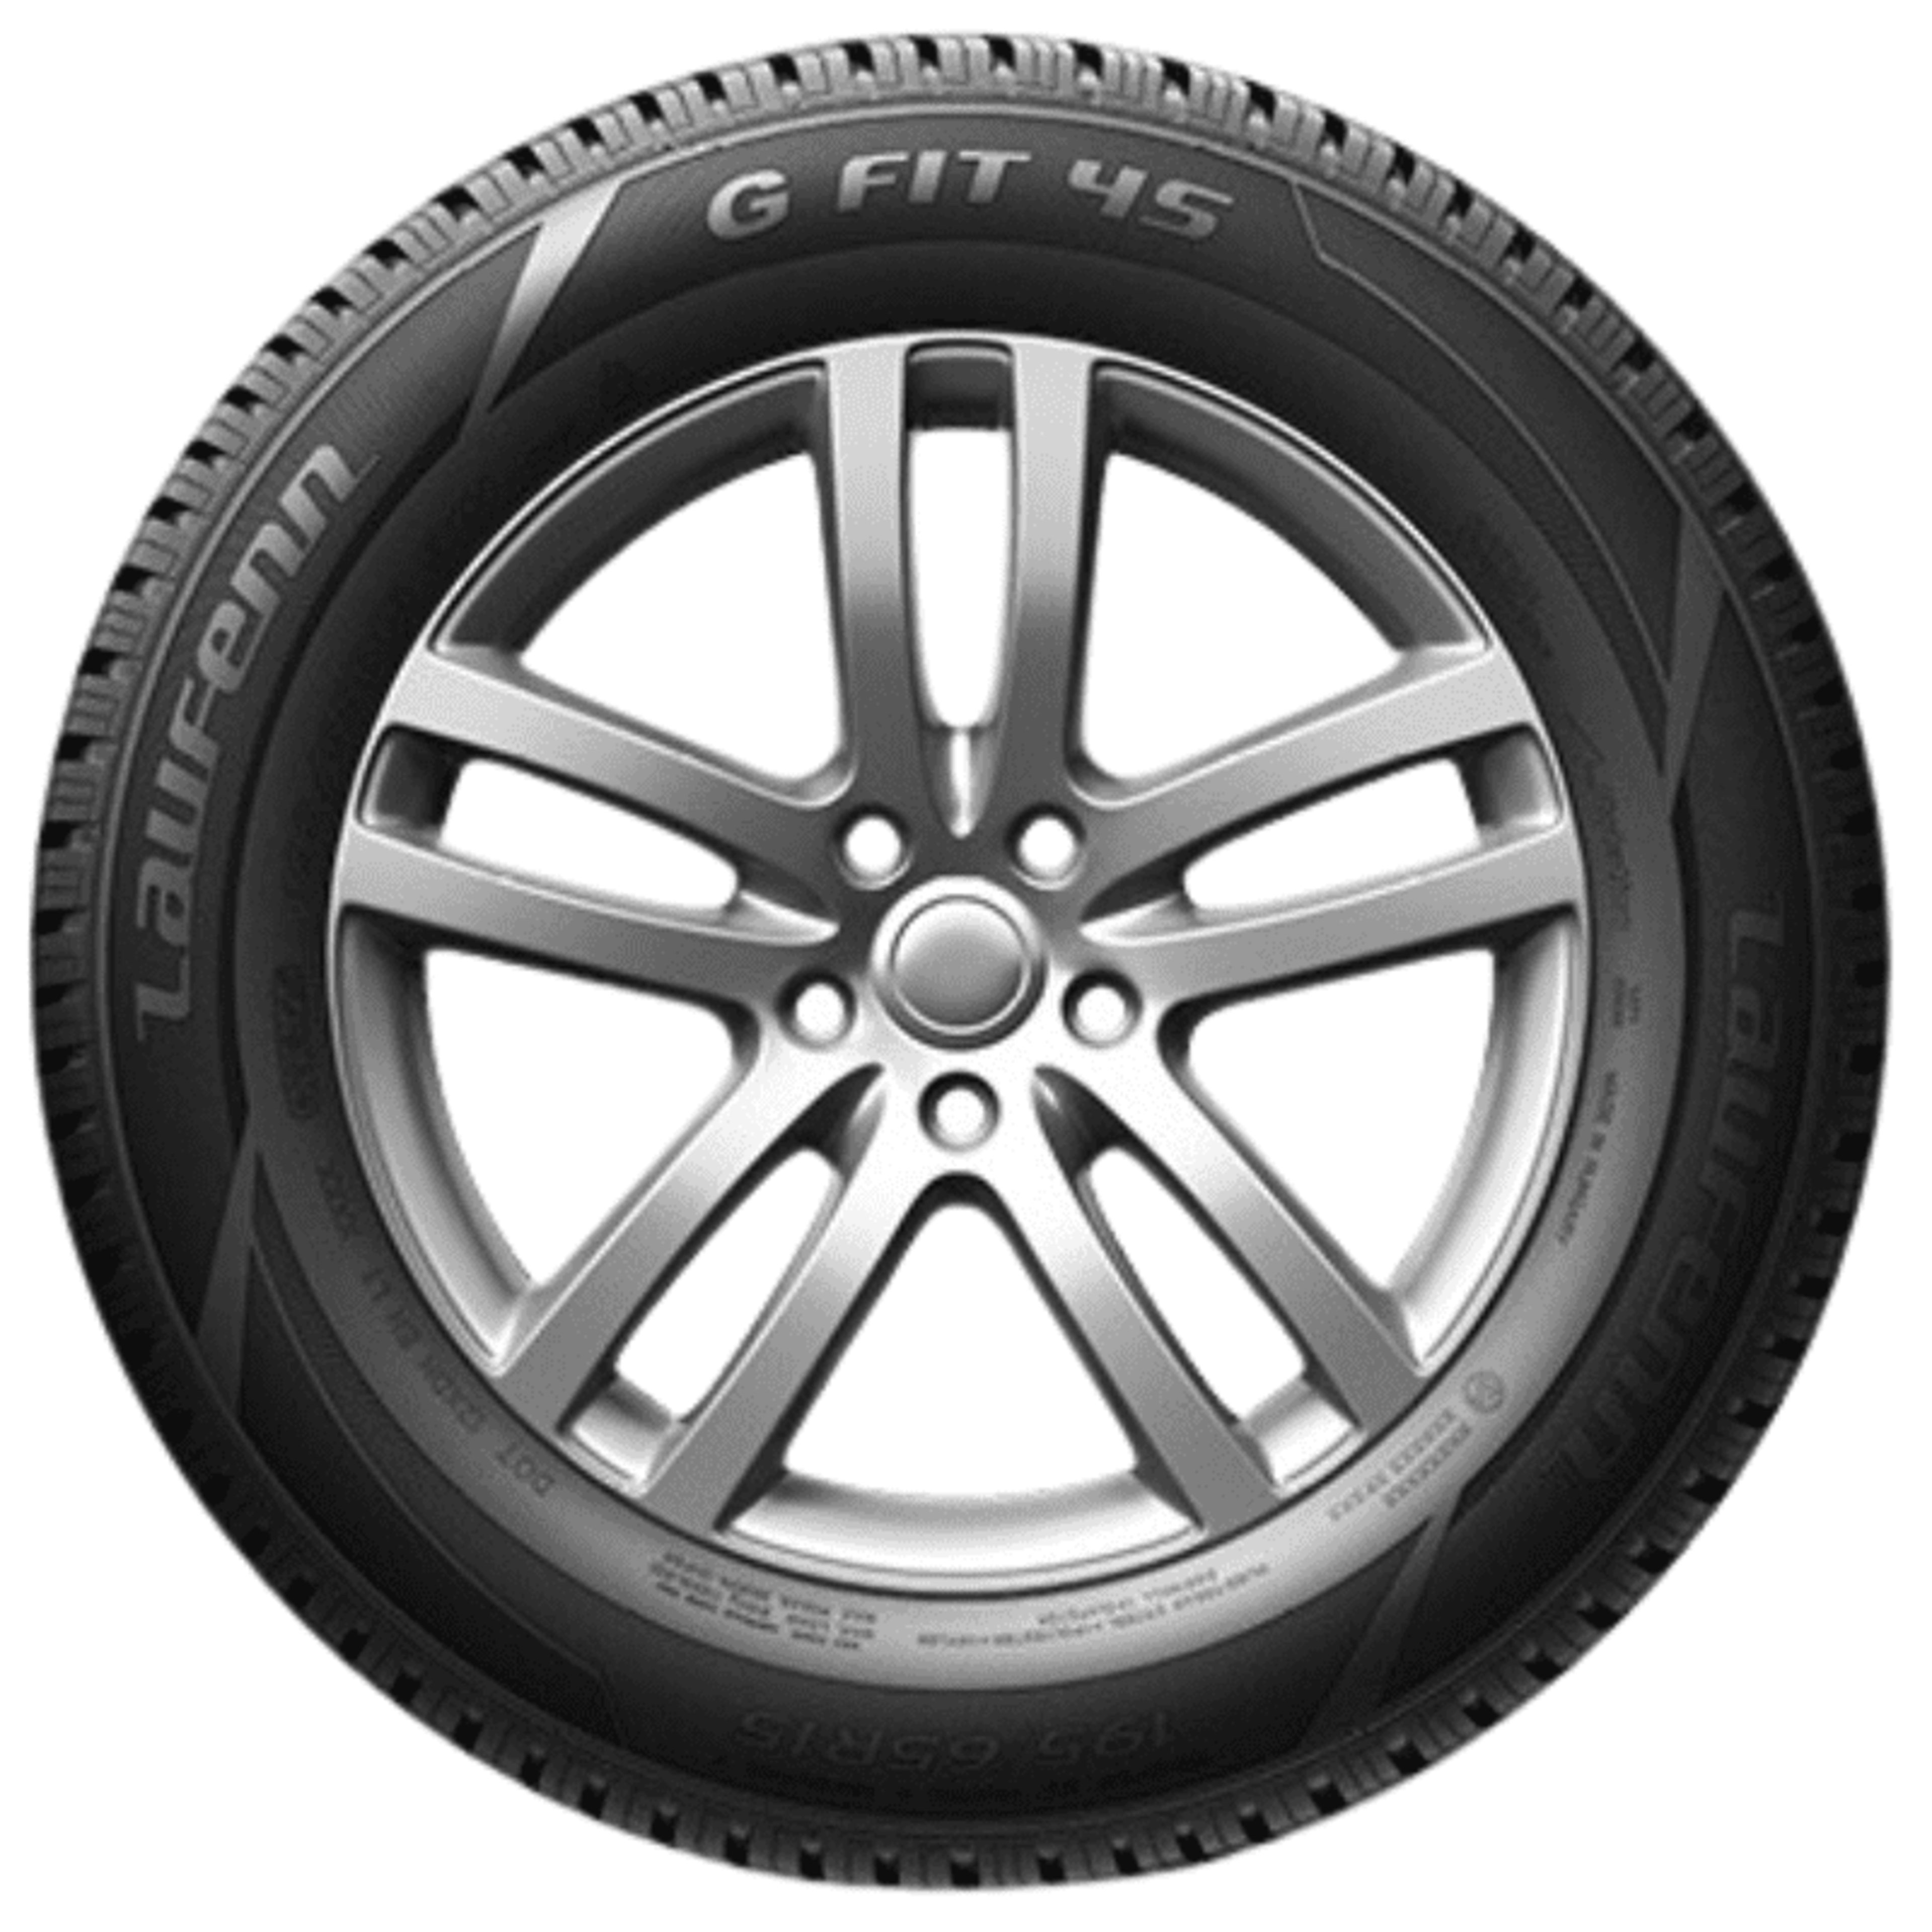 | Tires FIT Buy Laufenn G SimpleTire 4S Online